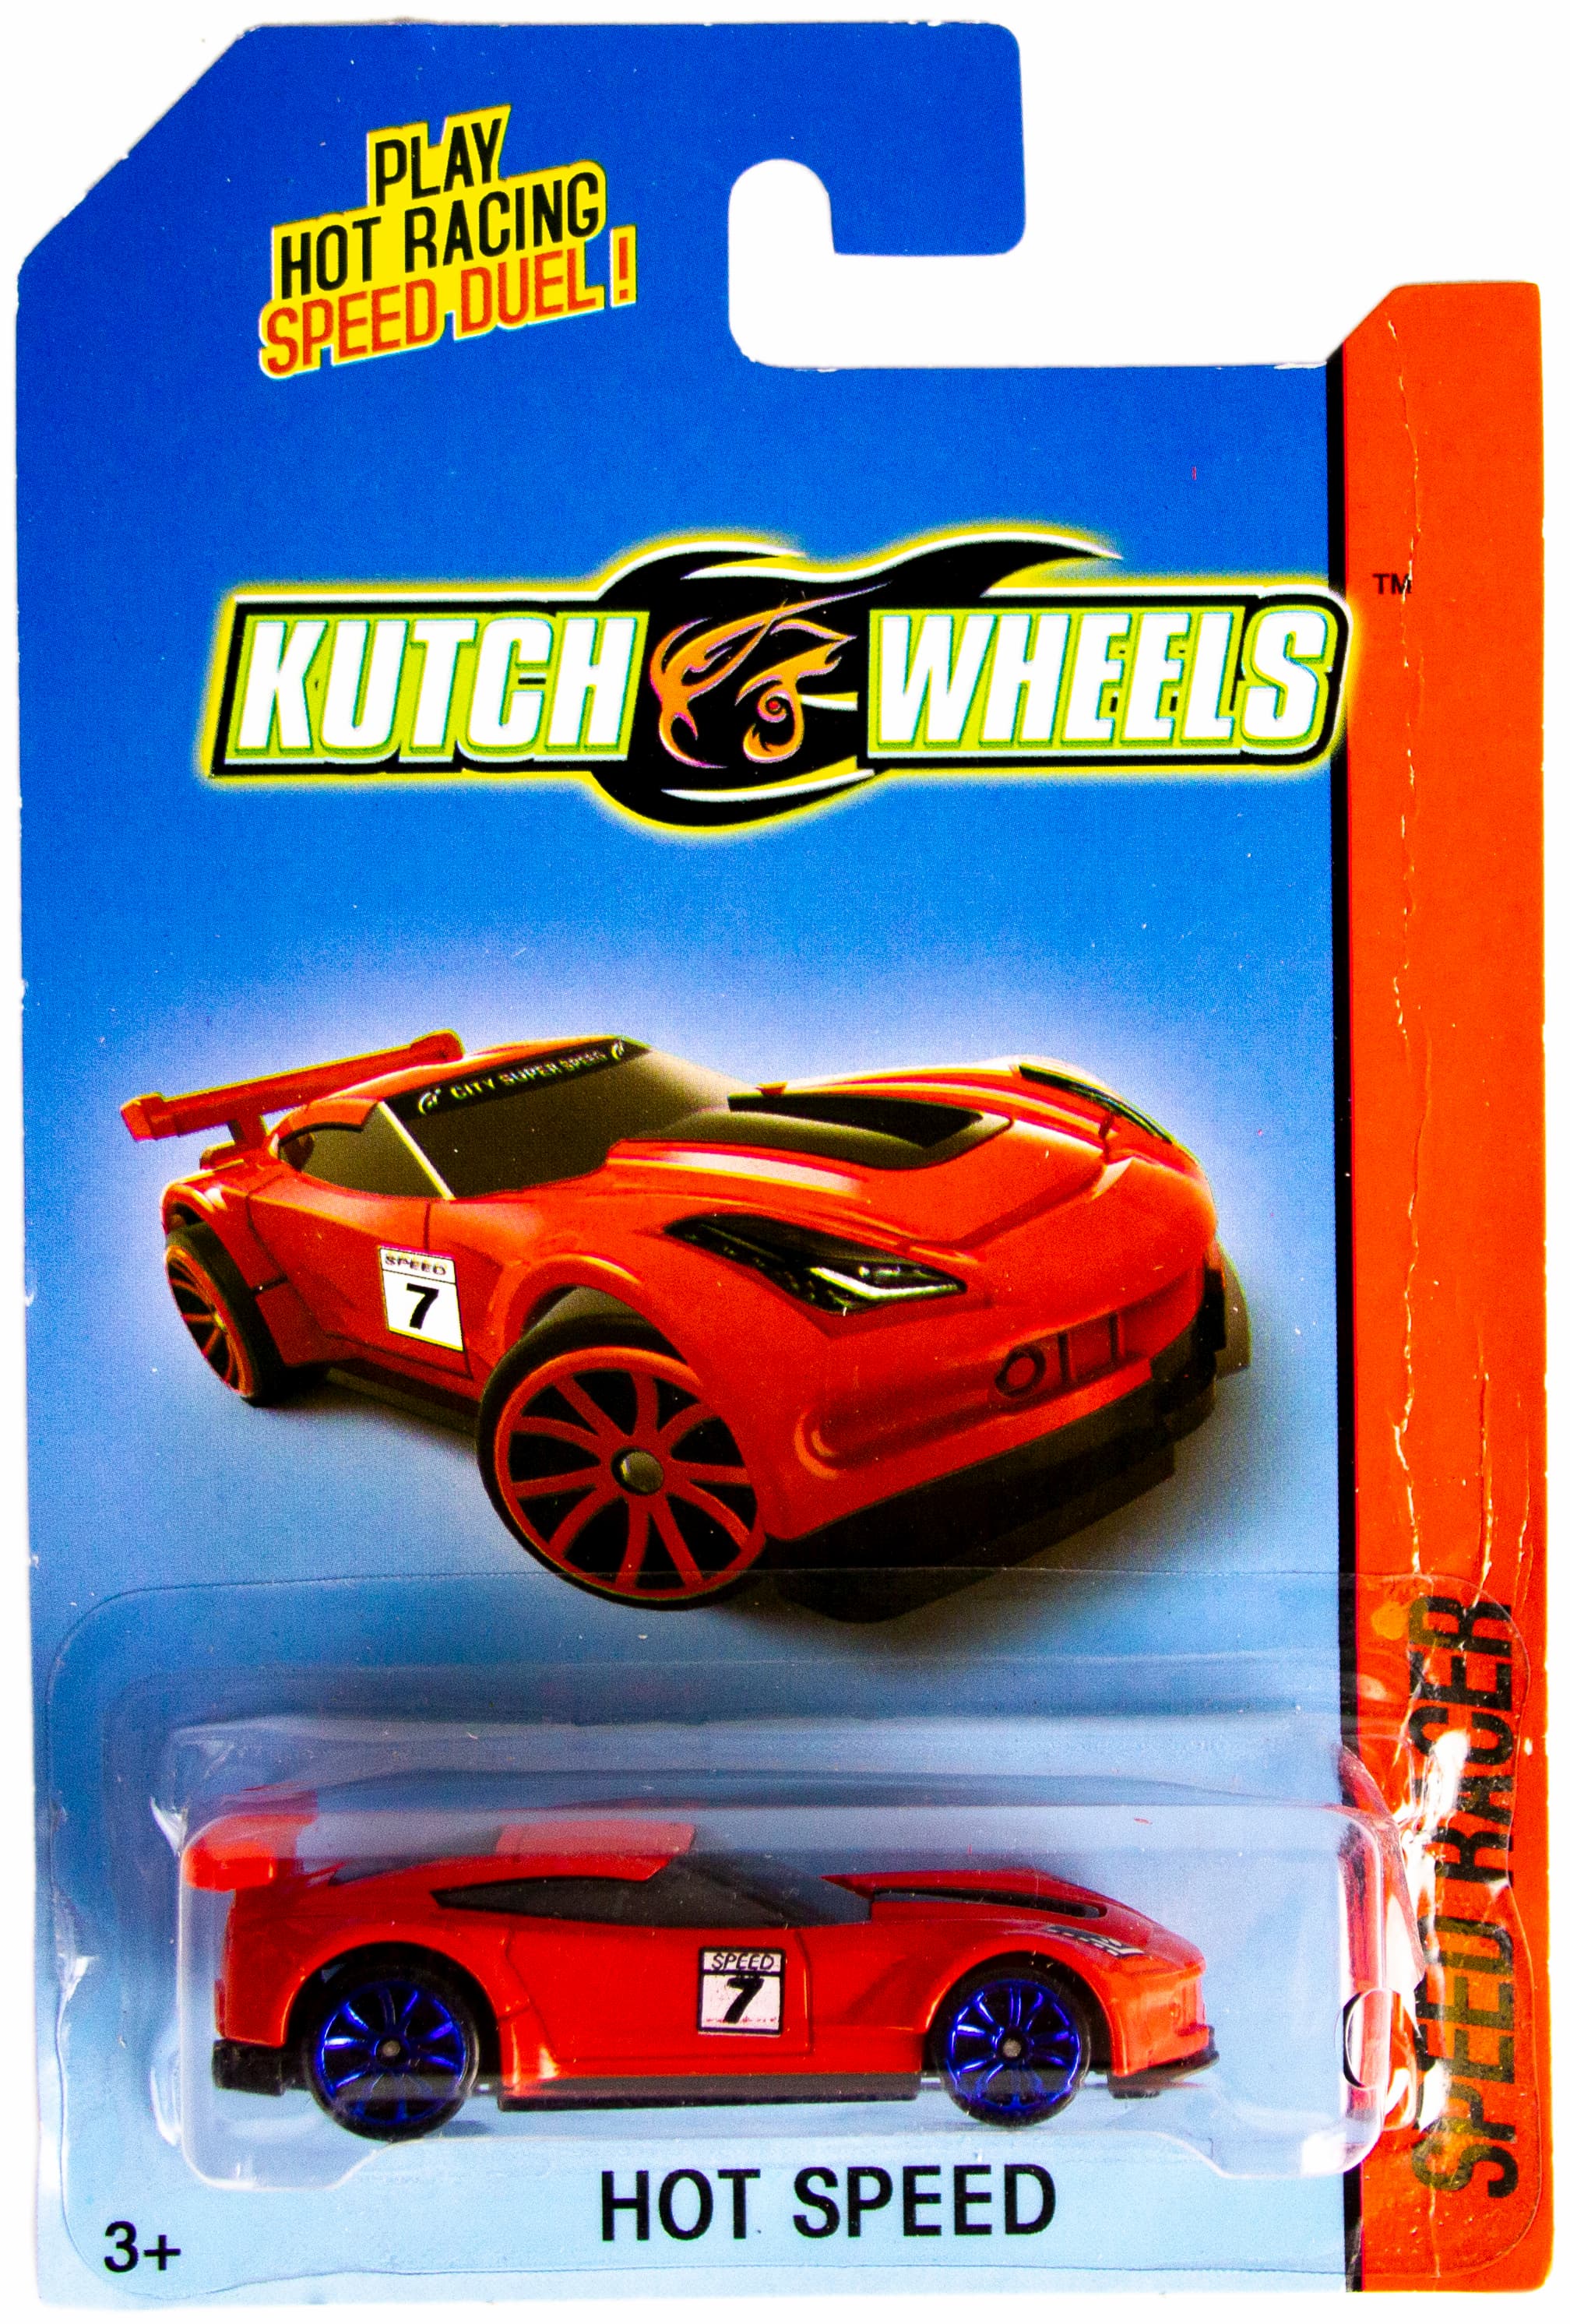 Набор металлический машинок Kutch Wheels Speed Racers 868-1 / 6 штук